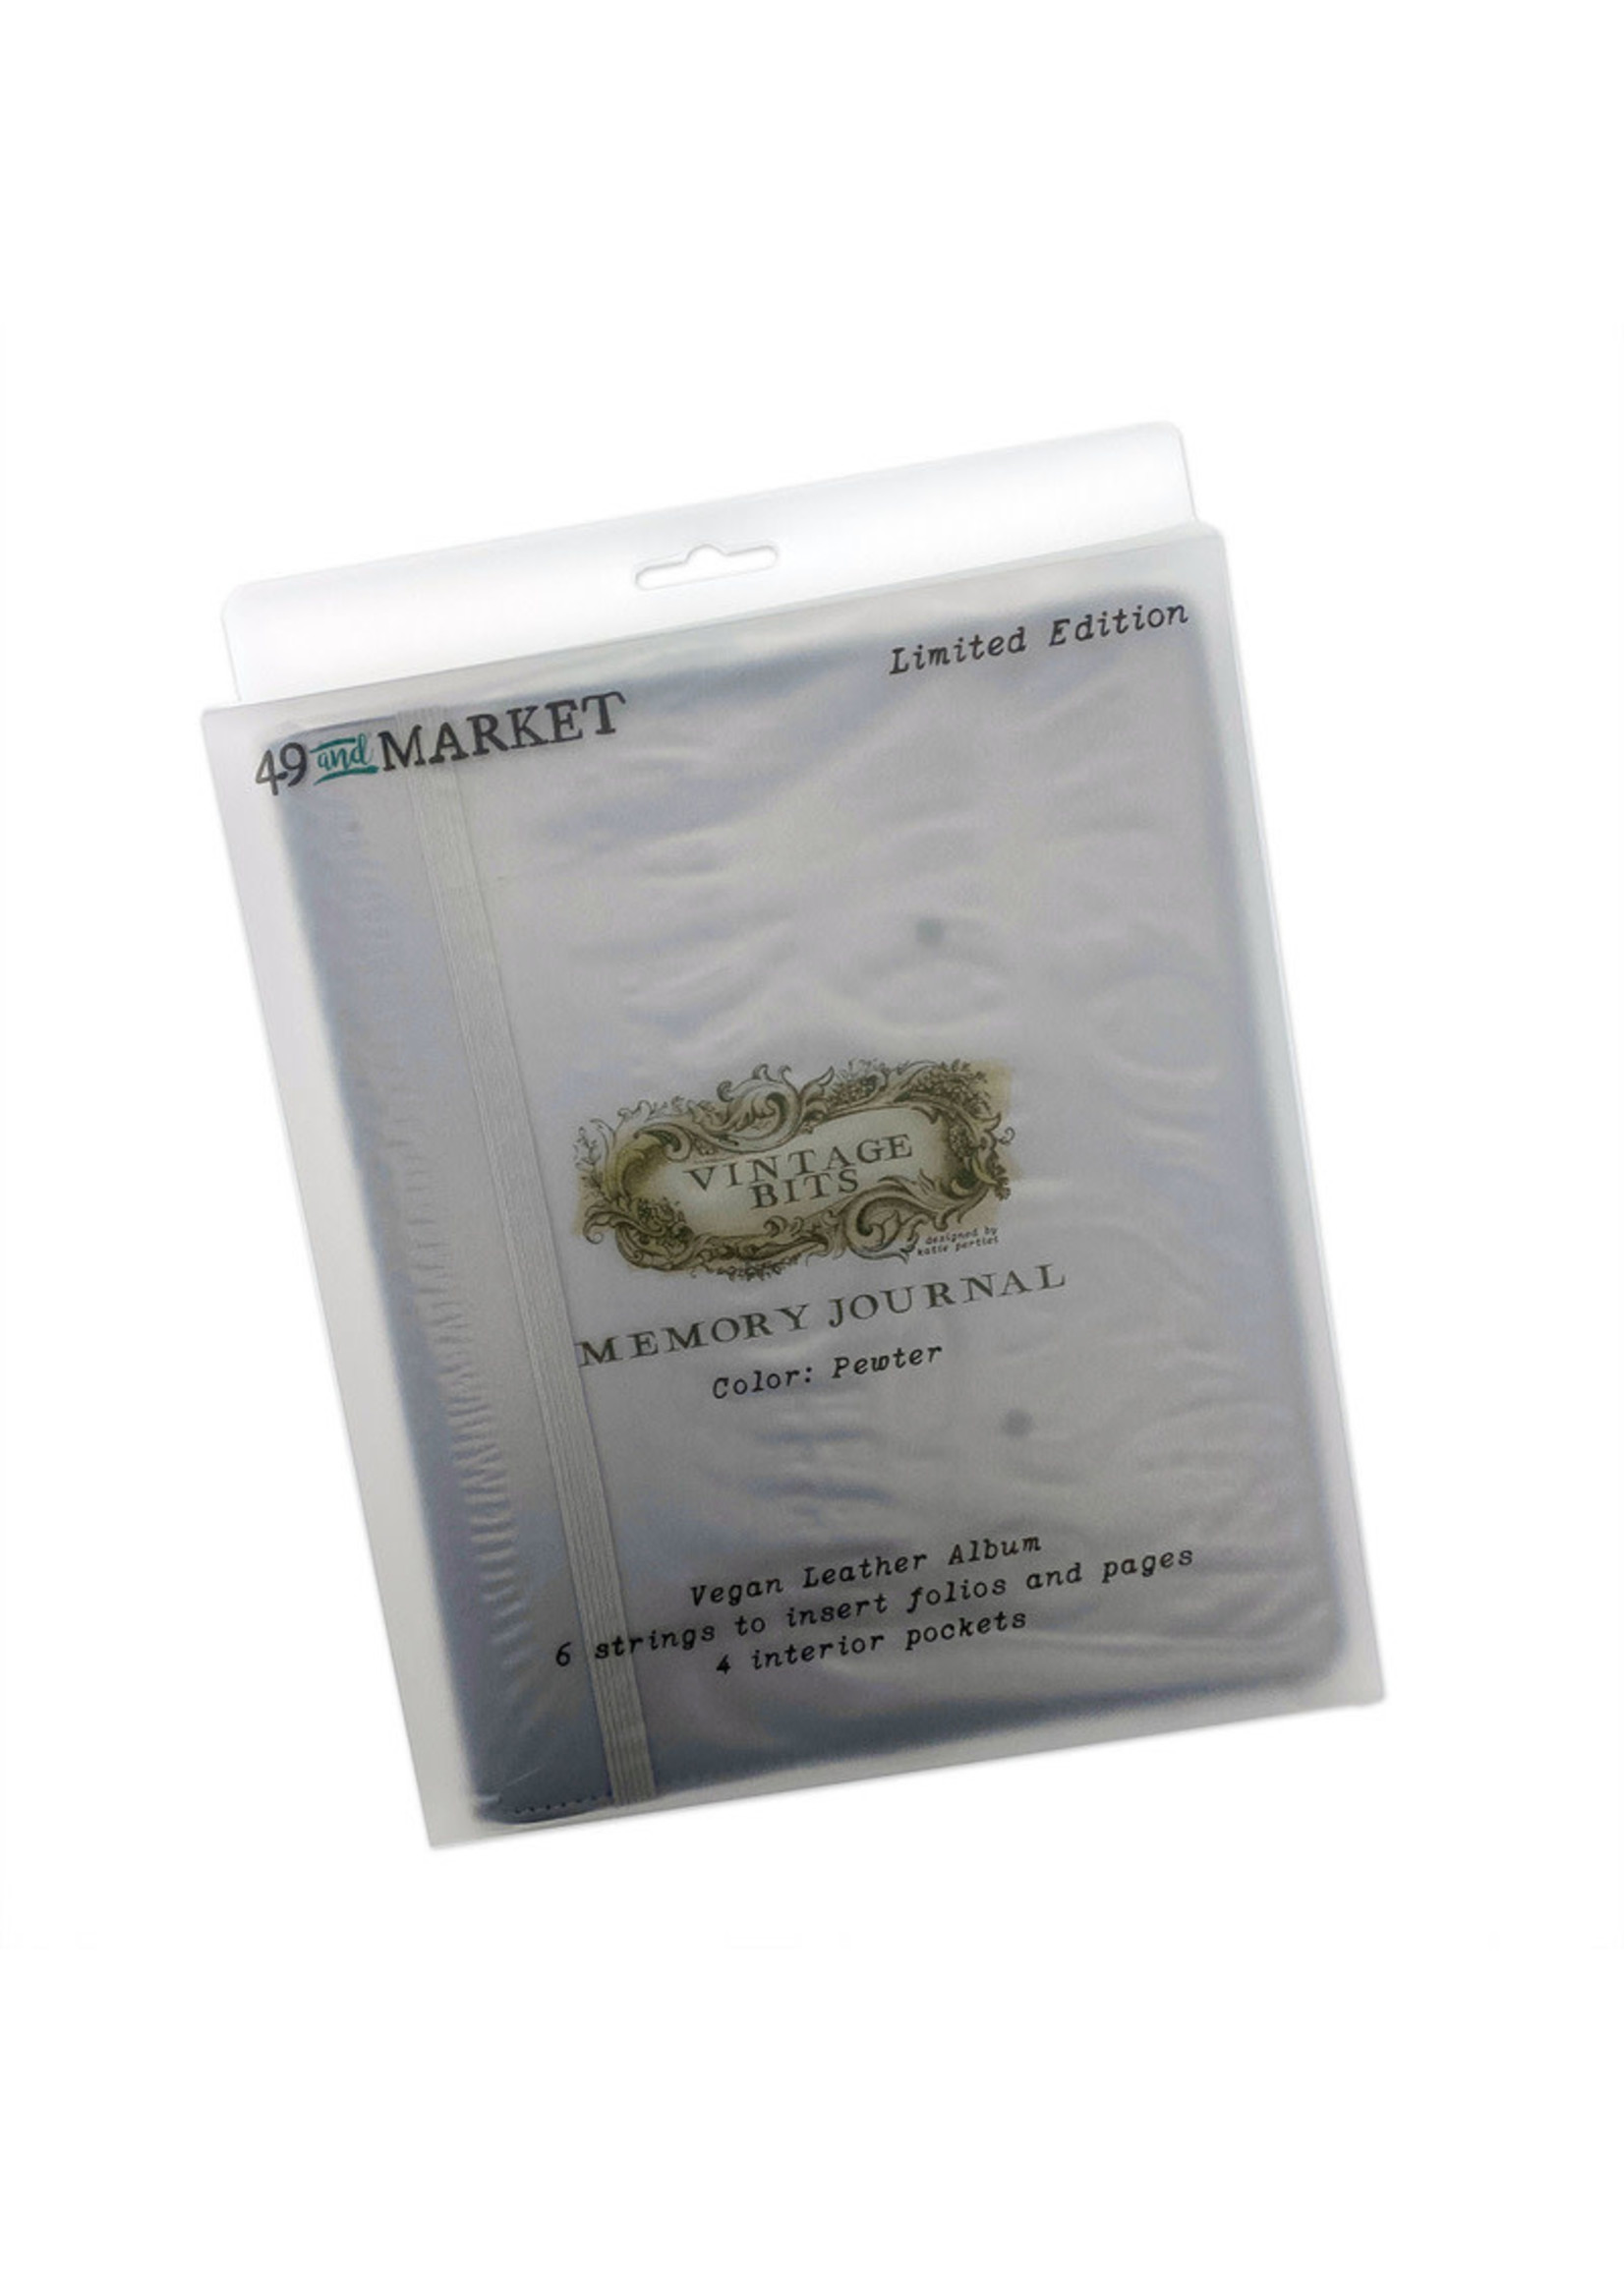 49 & Market Vintage Bits Memory Journal, Pewter